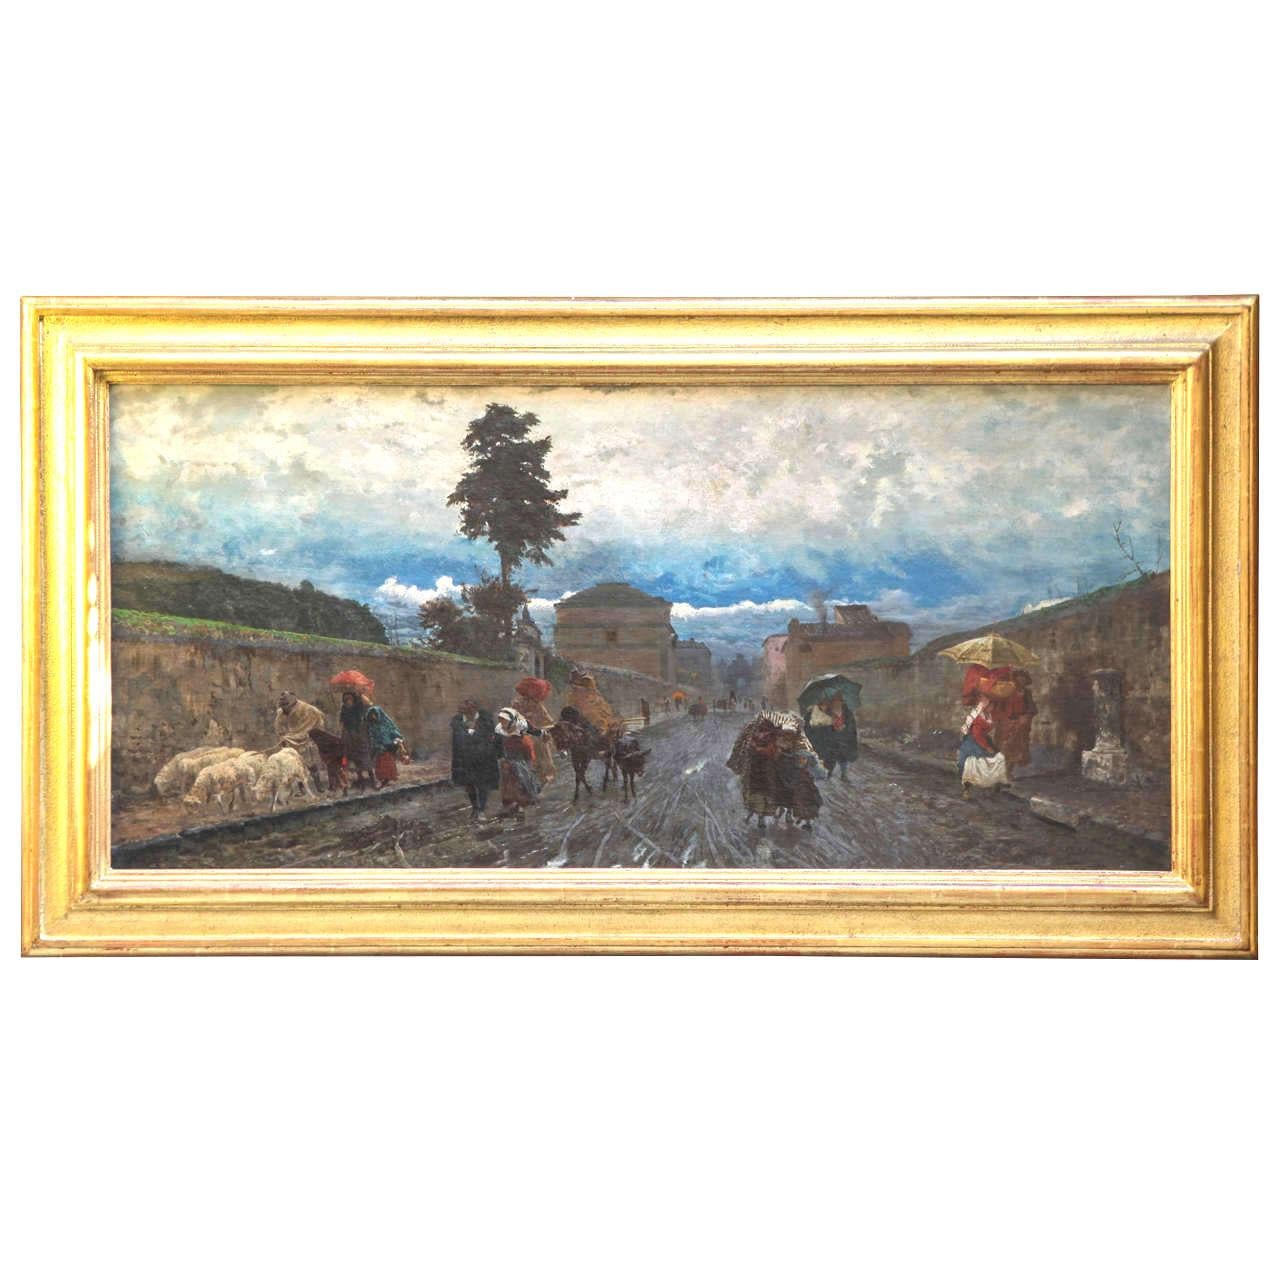 Pio Joris Landscape Painting - 19th Century Italian Landscape Oil Painting - Via Flaminia on a Sunday morning